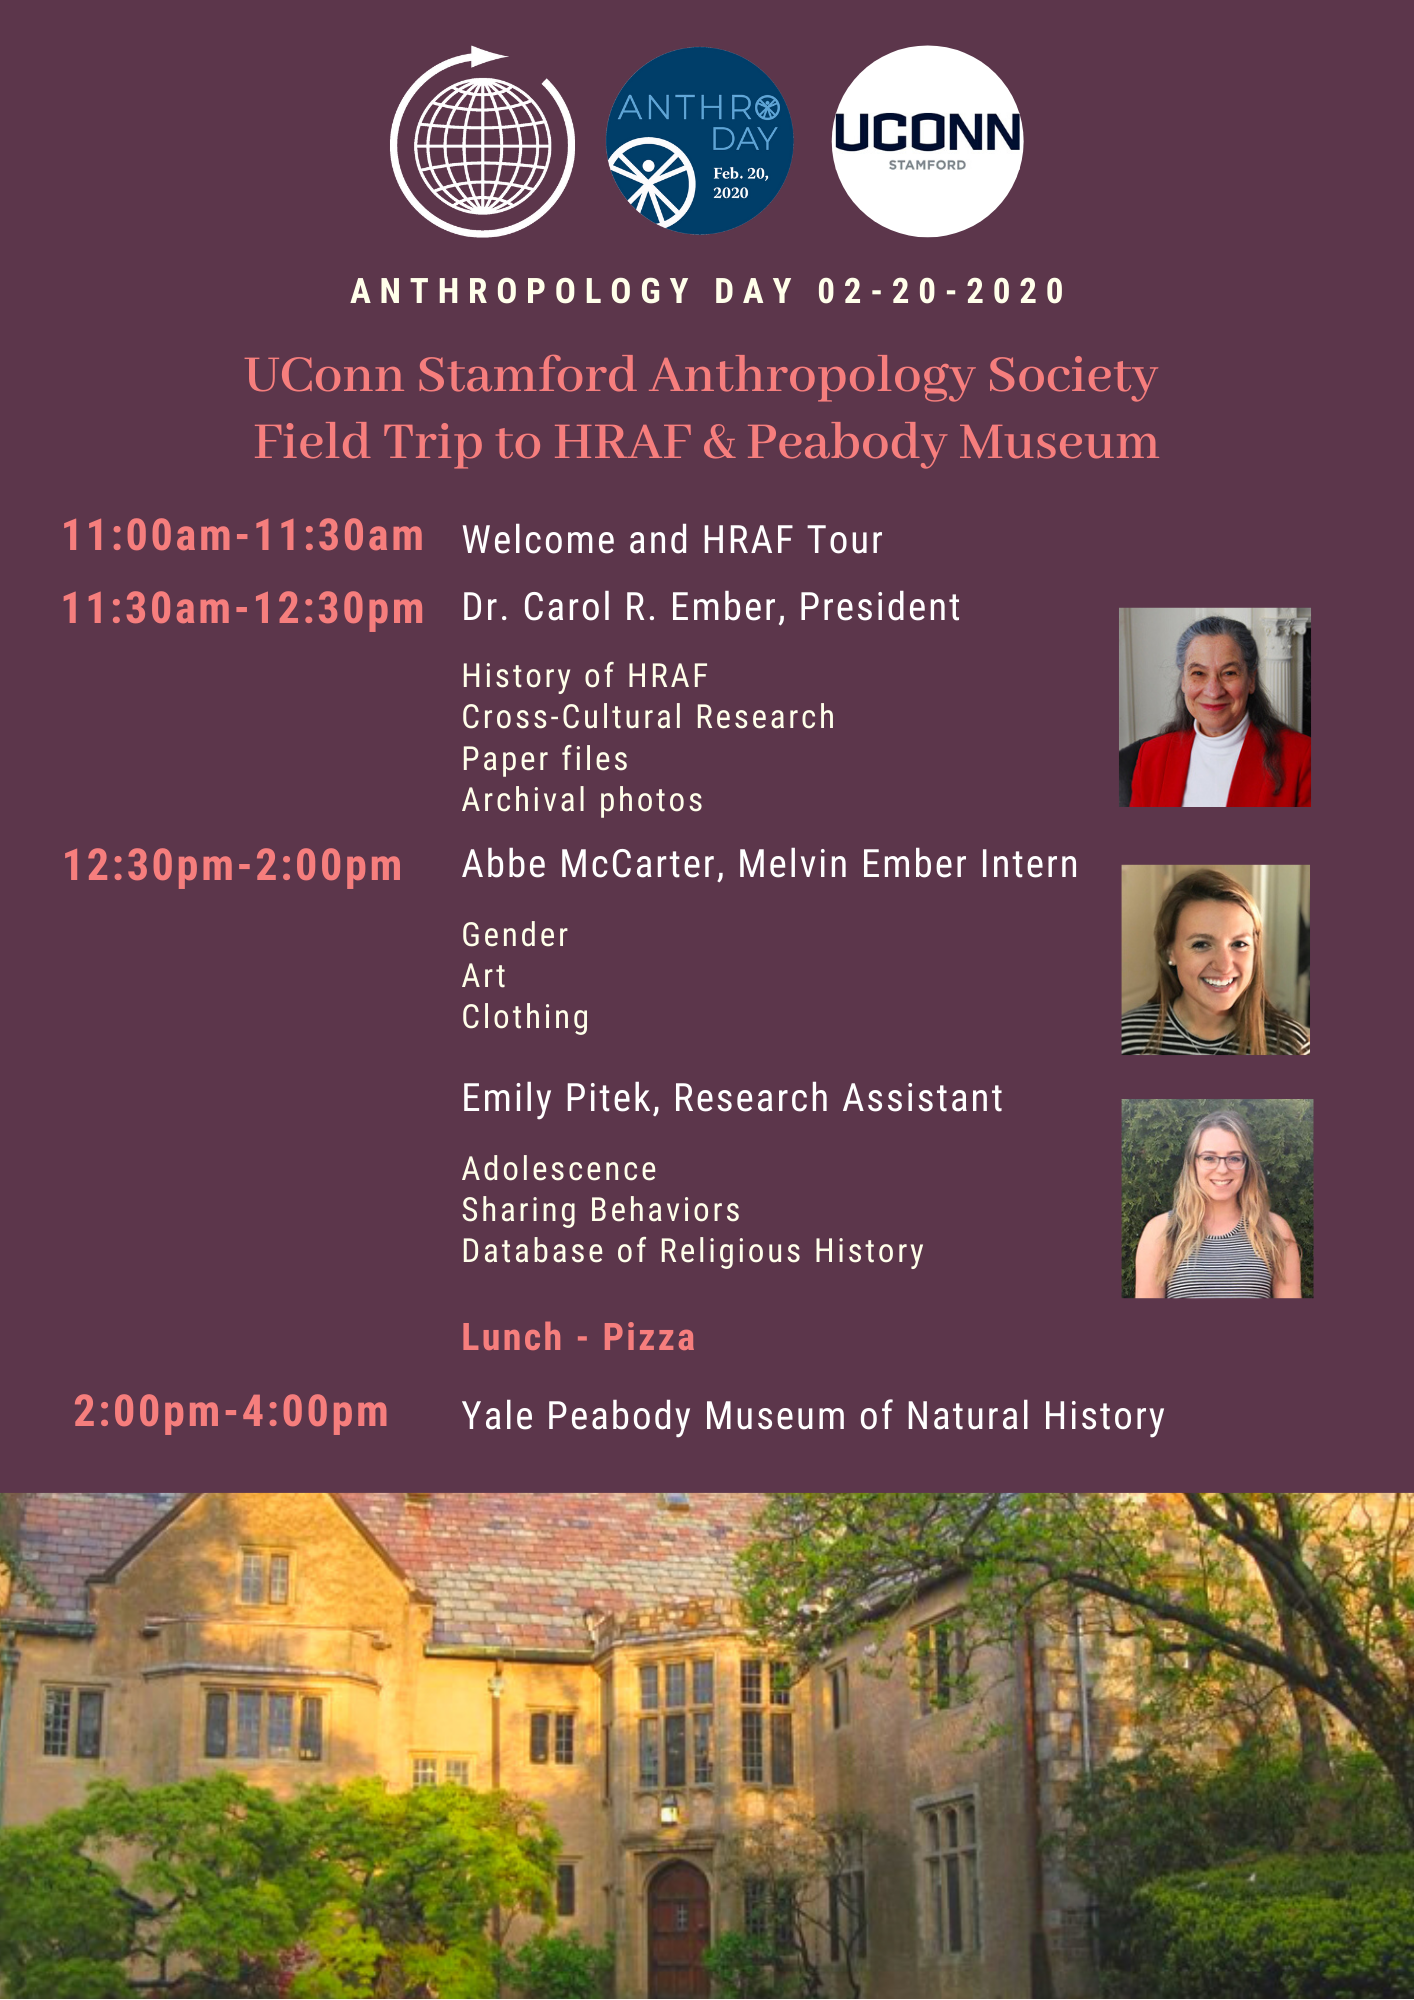 UConn Stamford Anthropology Society Field Trip to HRAF & Peabody Museum